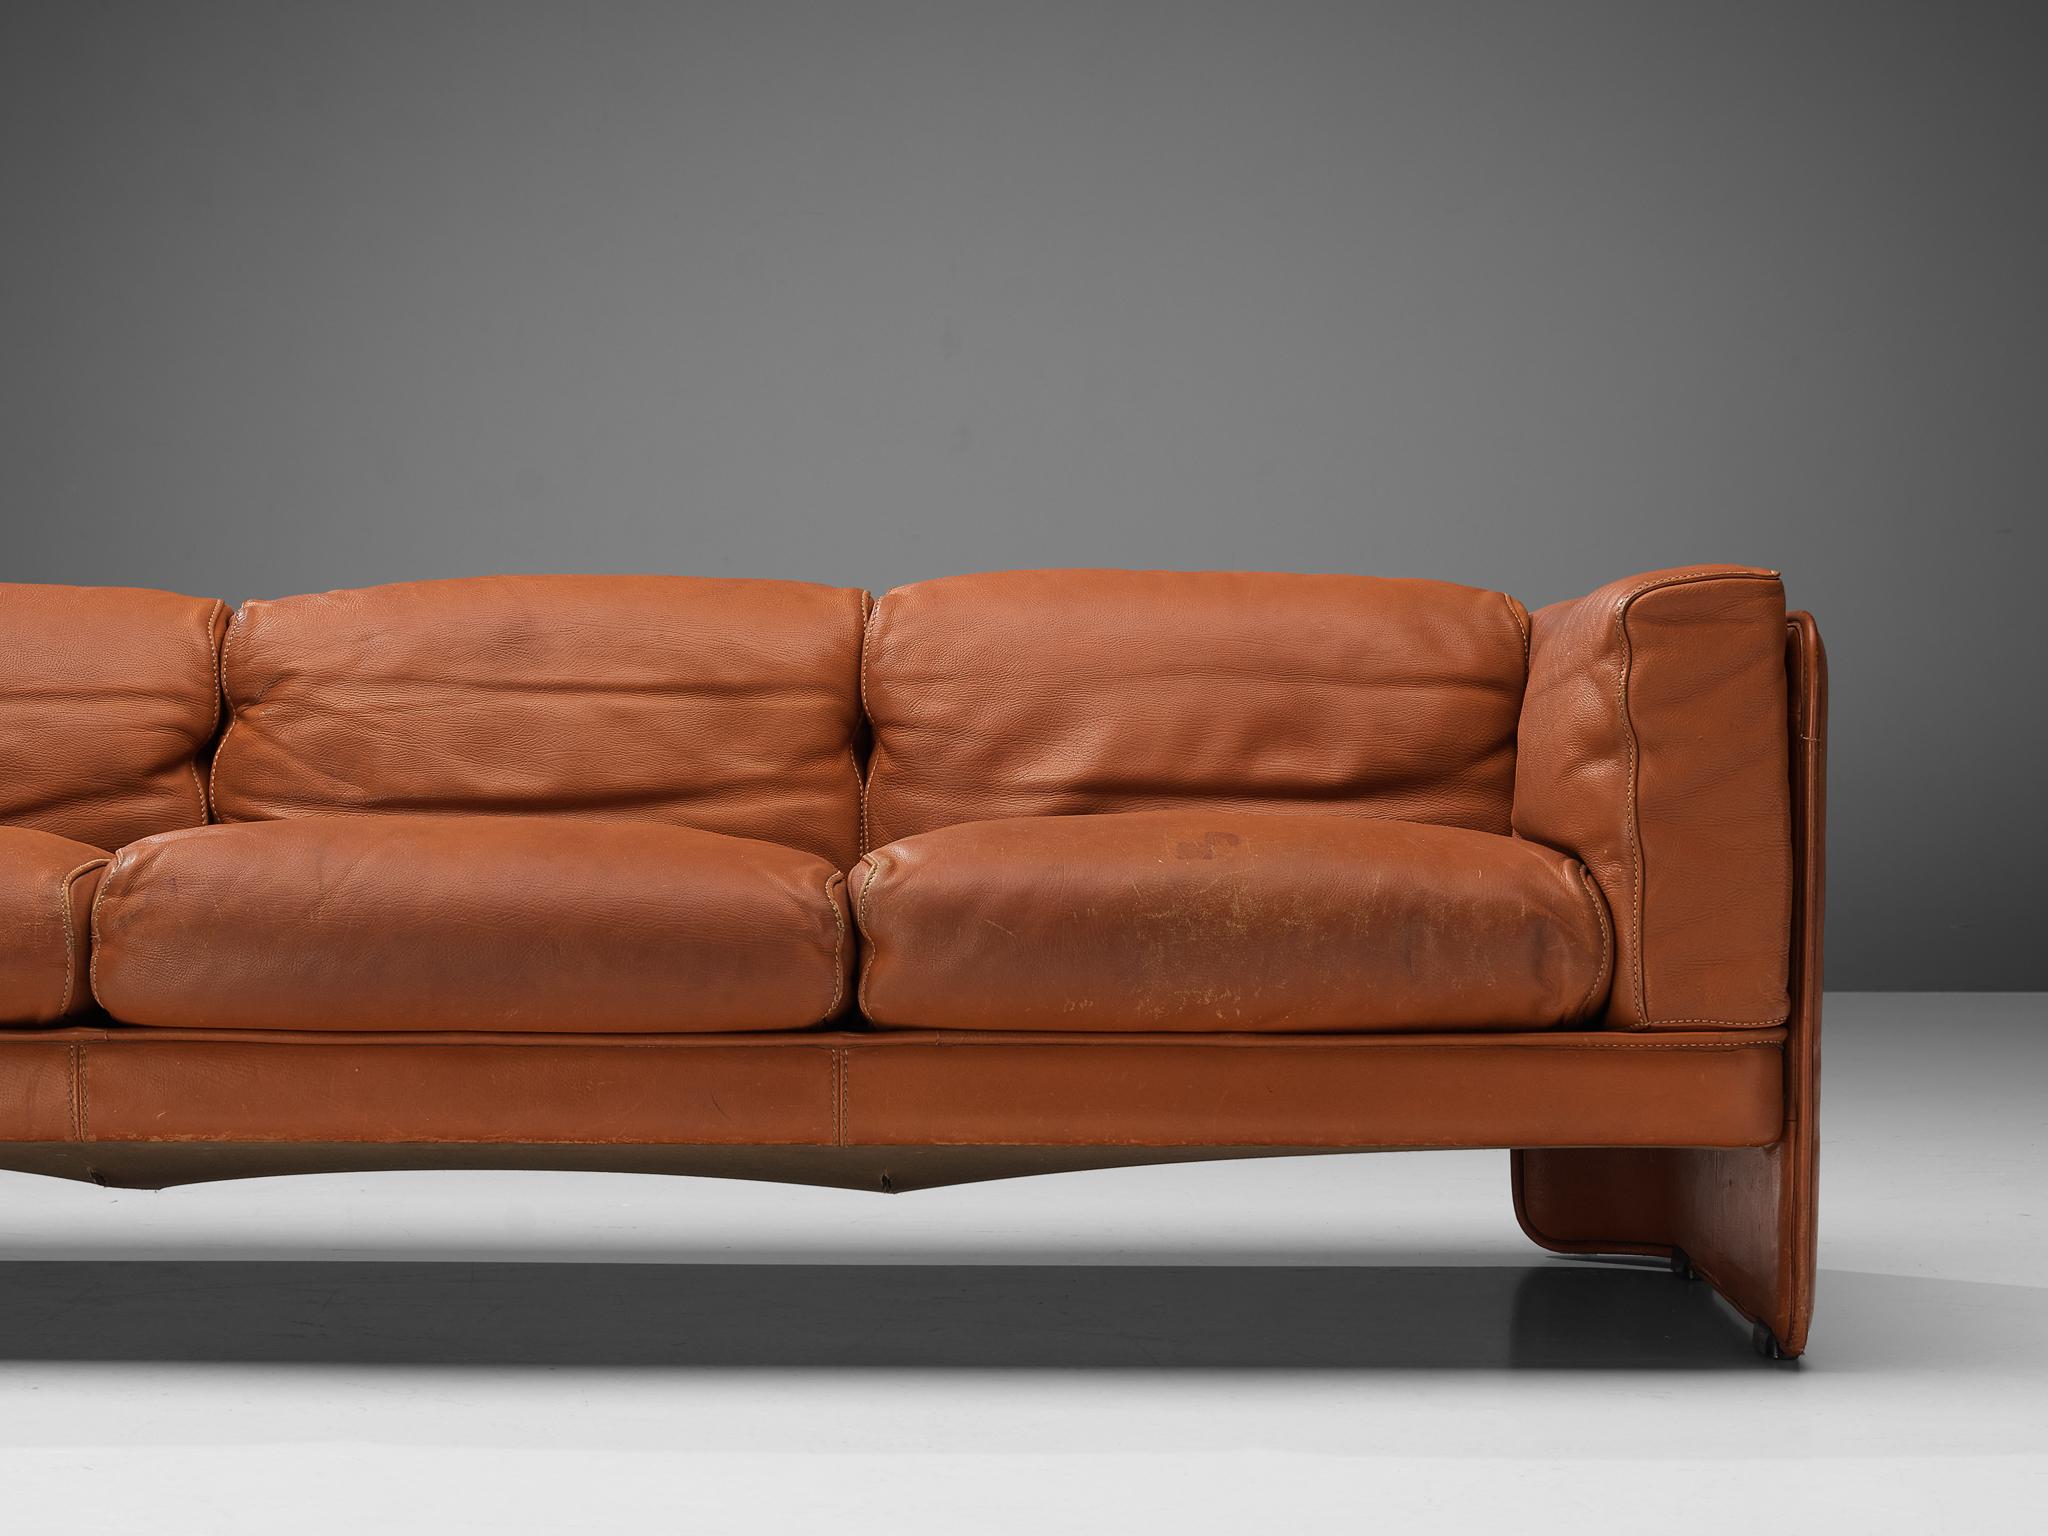 Mid-Century Modern Poltrona Frau Sofa in Reddish Brown Leather